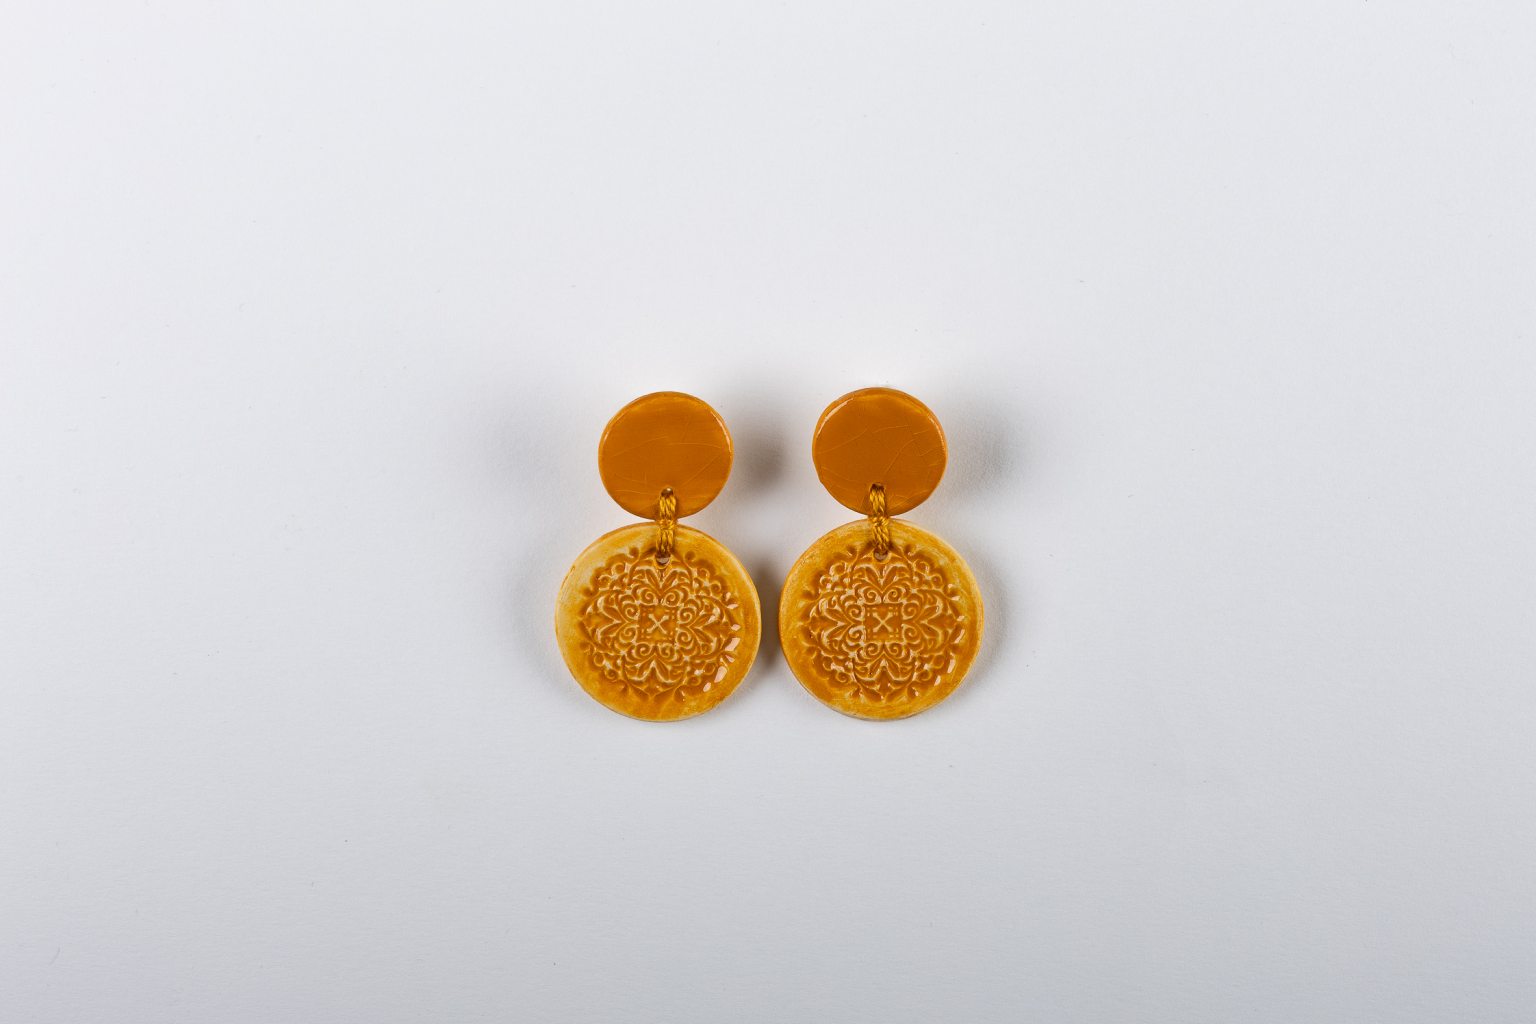 Handmade ceramic yellow earrings